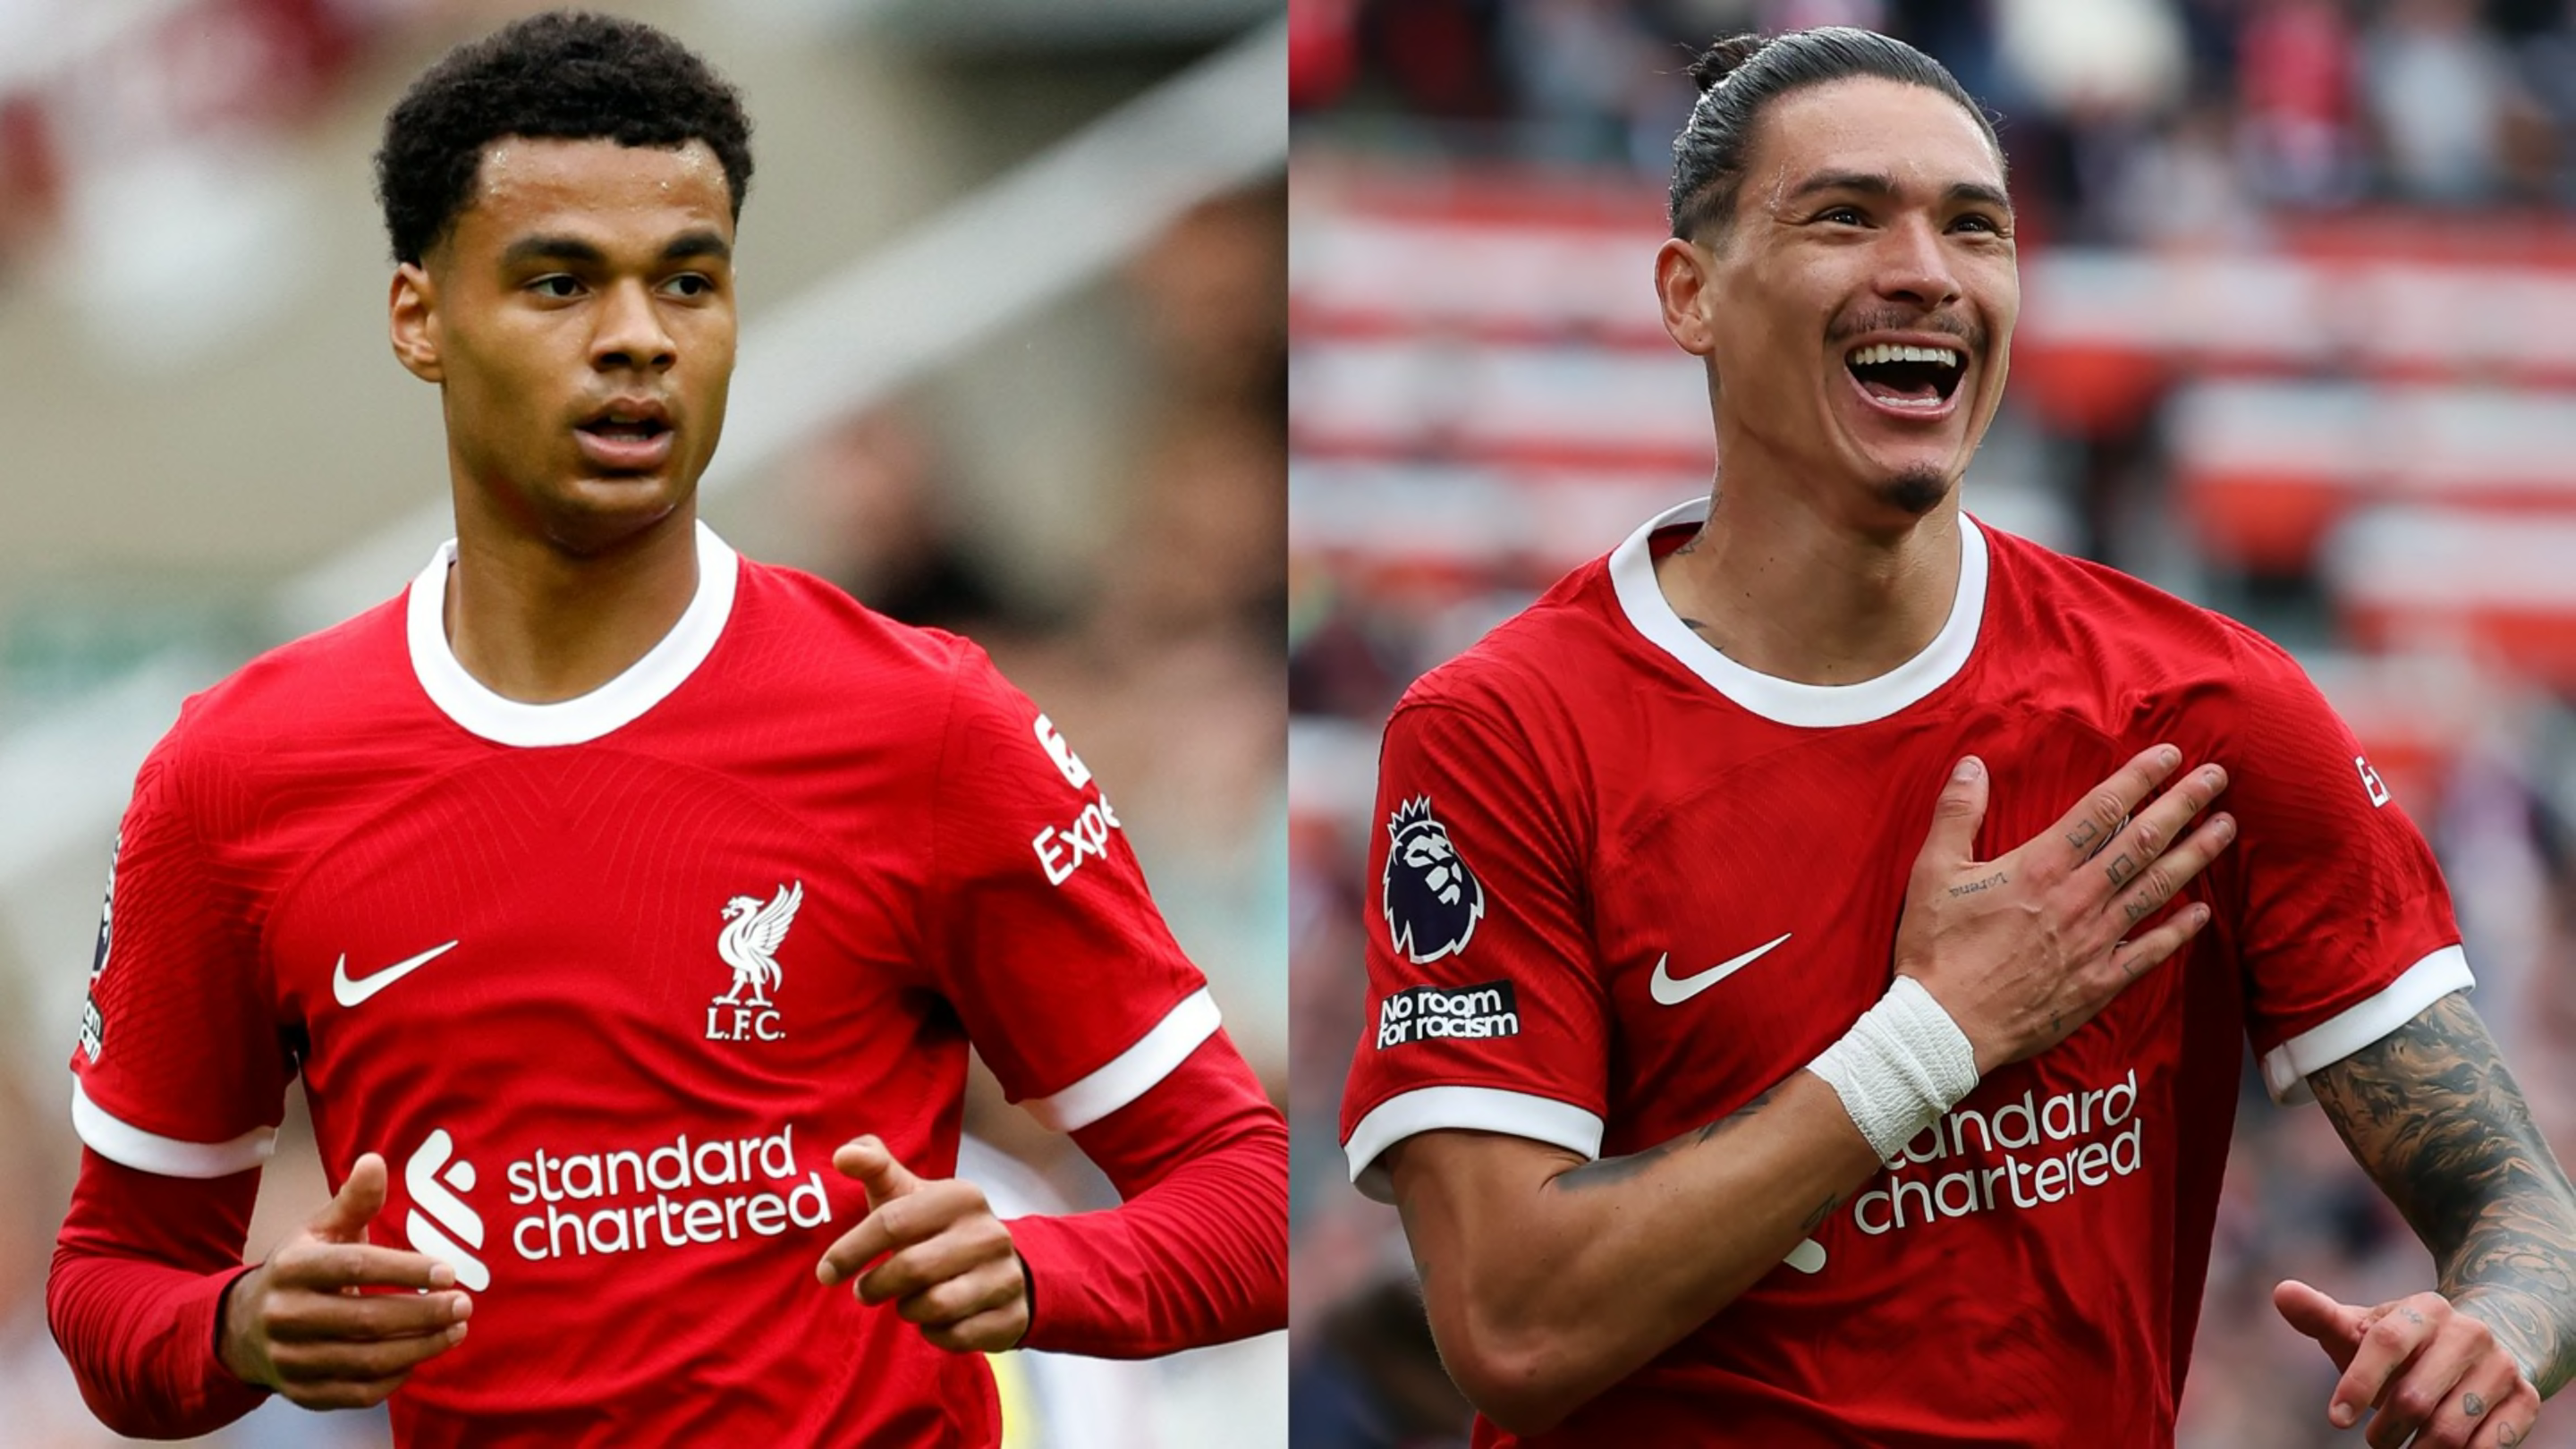 Cody Gakpo or Darwin Nunez: Who should be Liverpool's starting striker? 